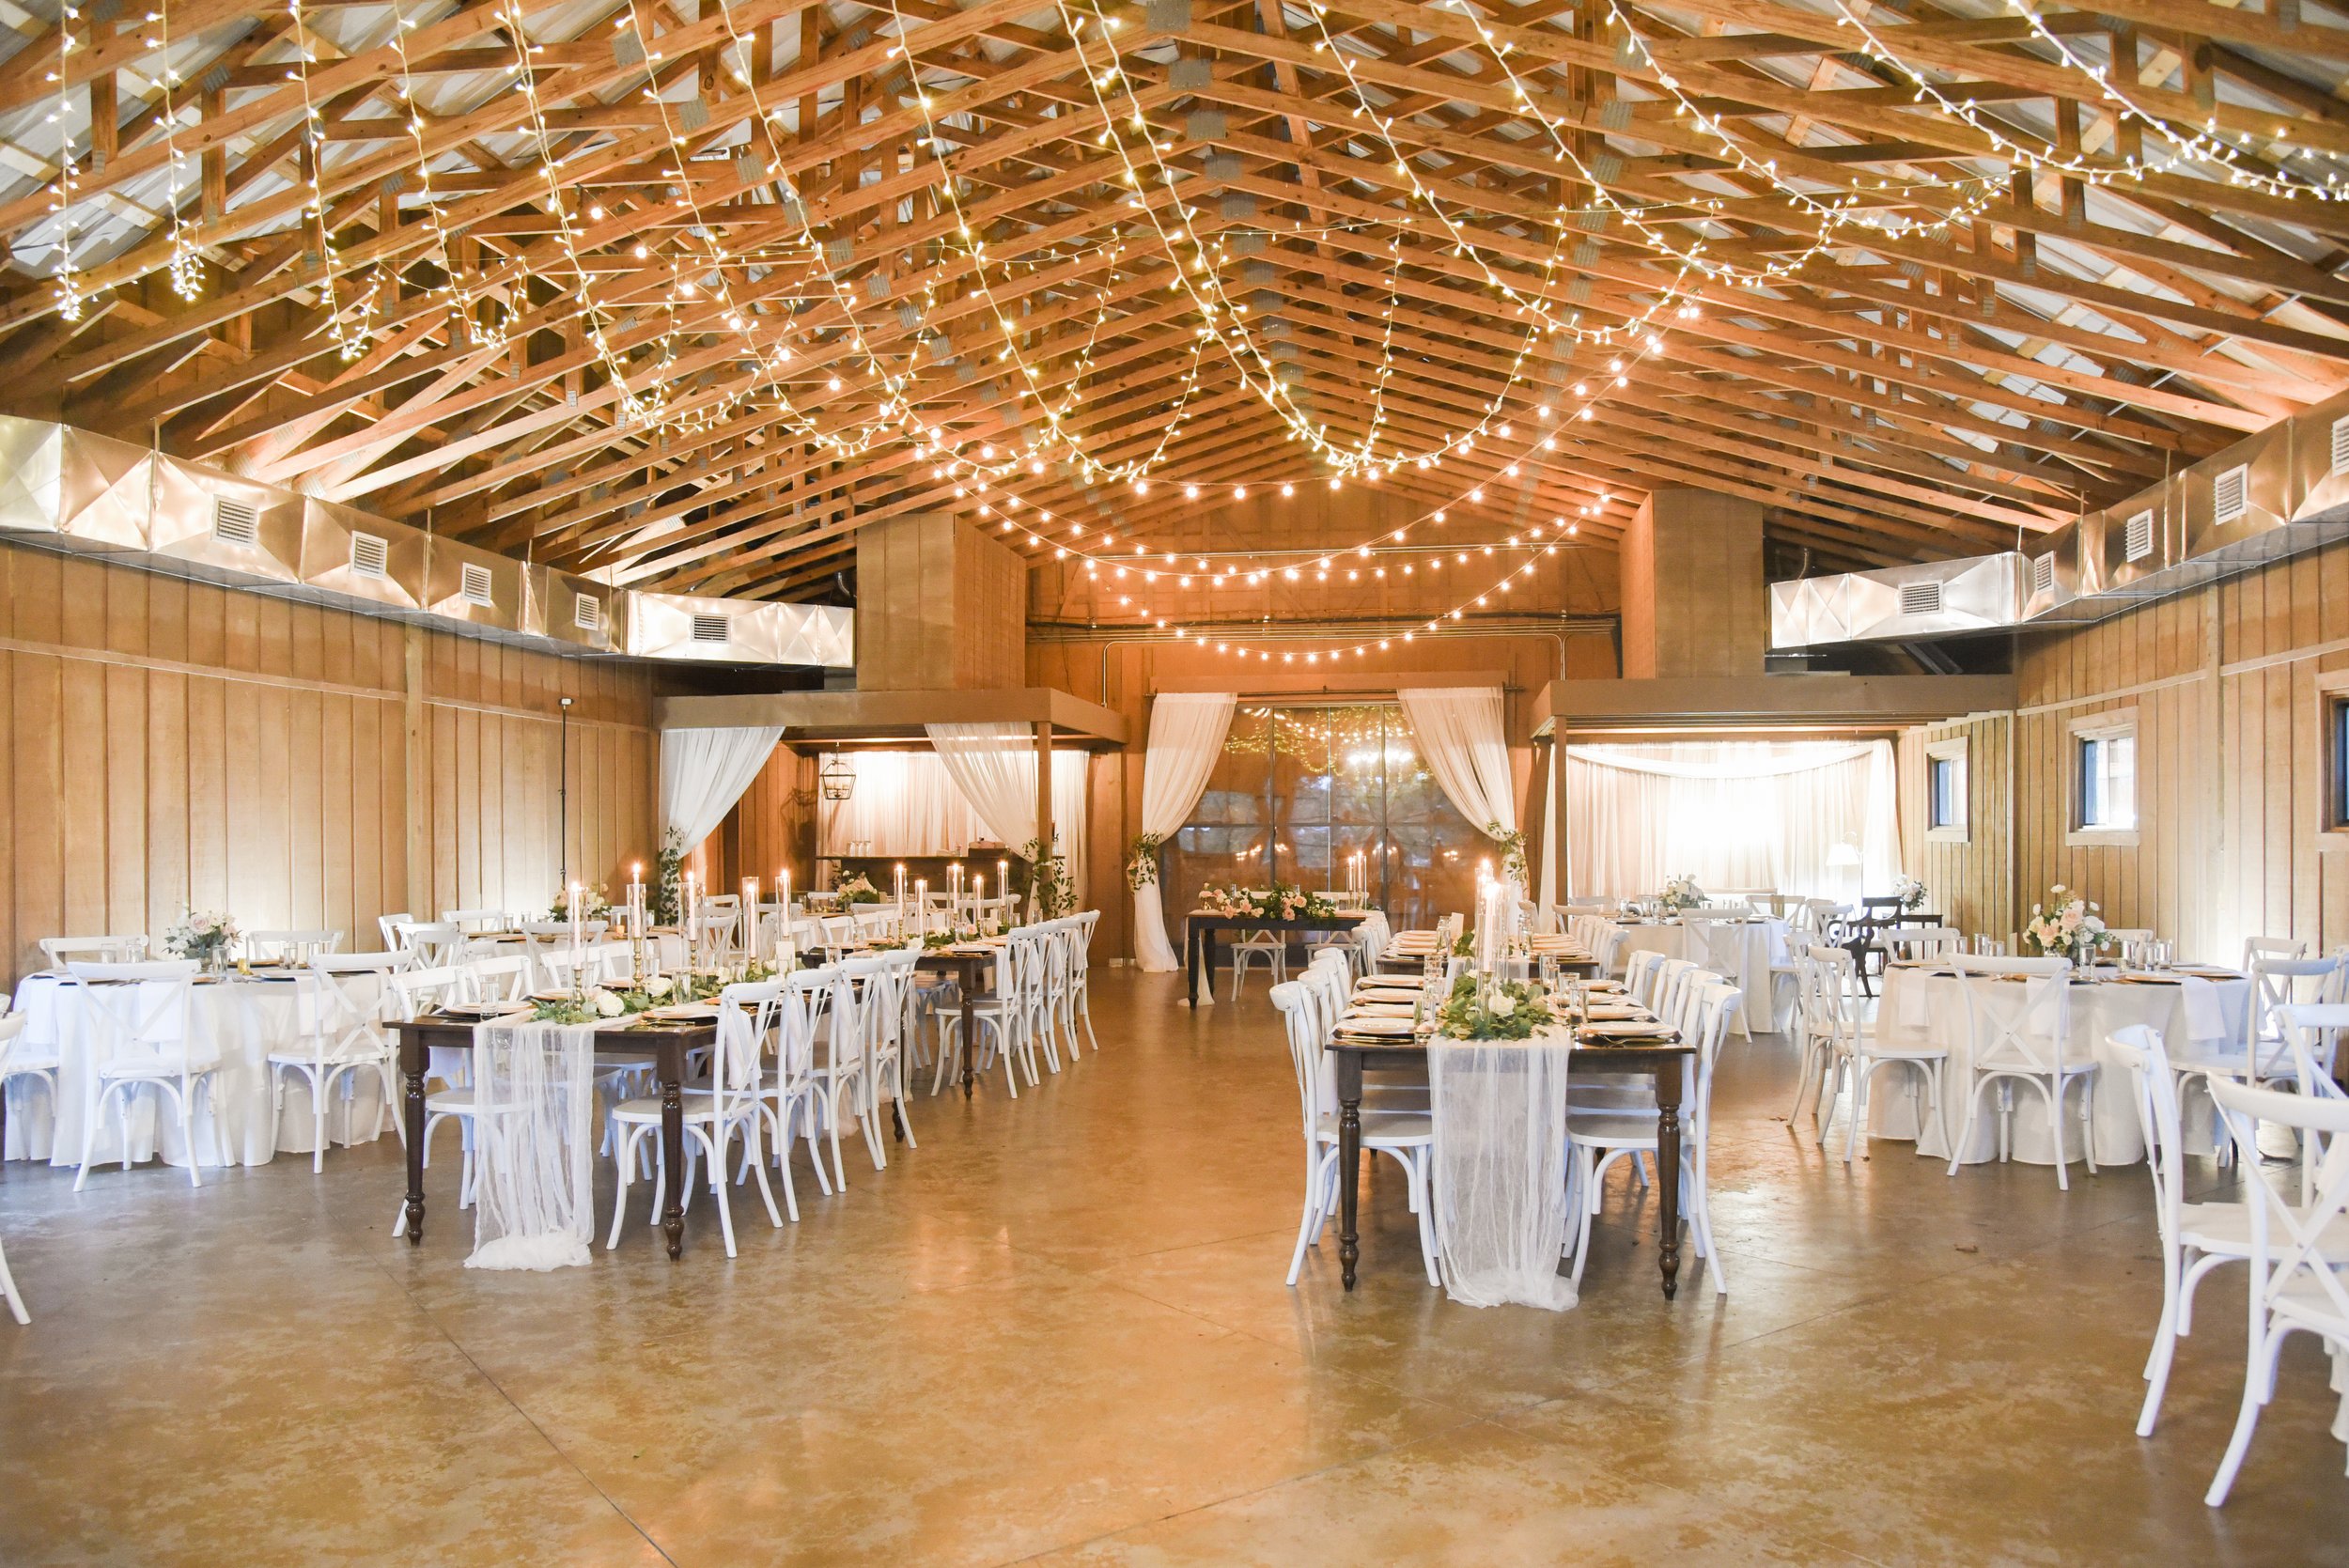  Farm Barn Elegant Indoor Wedding Venue Charlotte 